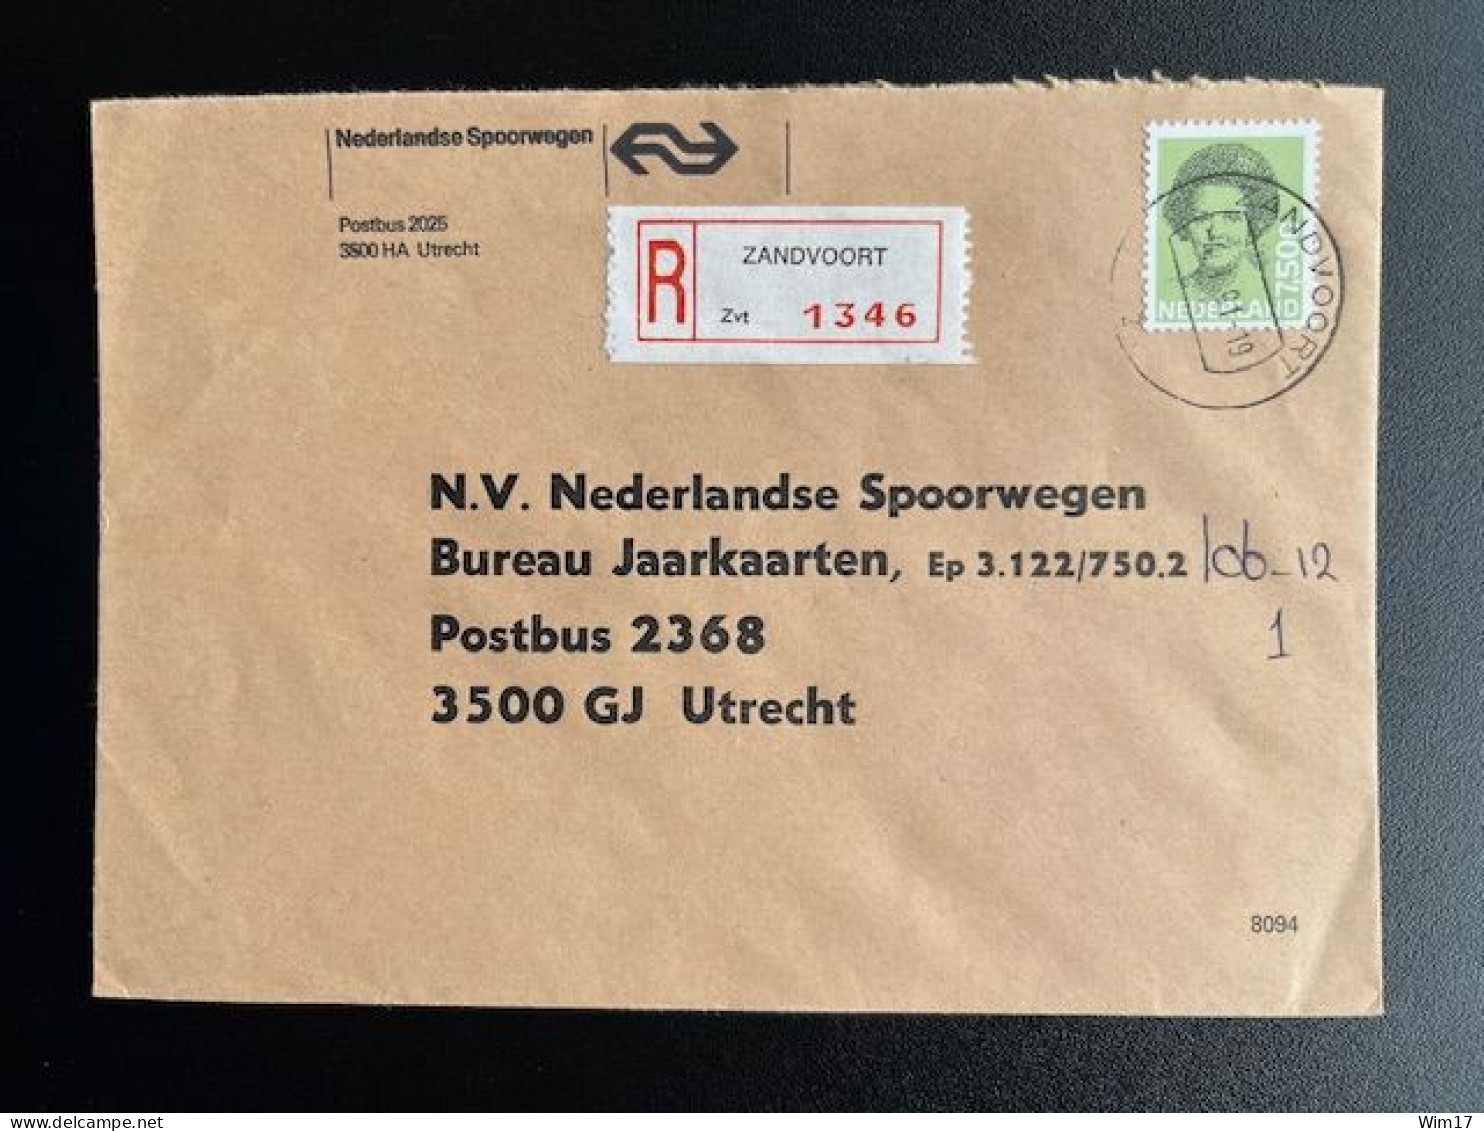 NETHERLANDS 1991 REGISTERED LETTER ZANDVOORT TO UTRECHT 04-01-1991 NEDERLAND AANGETEKEND - Lettres & Documents